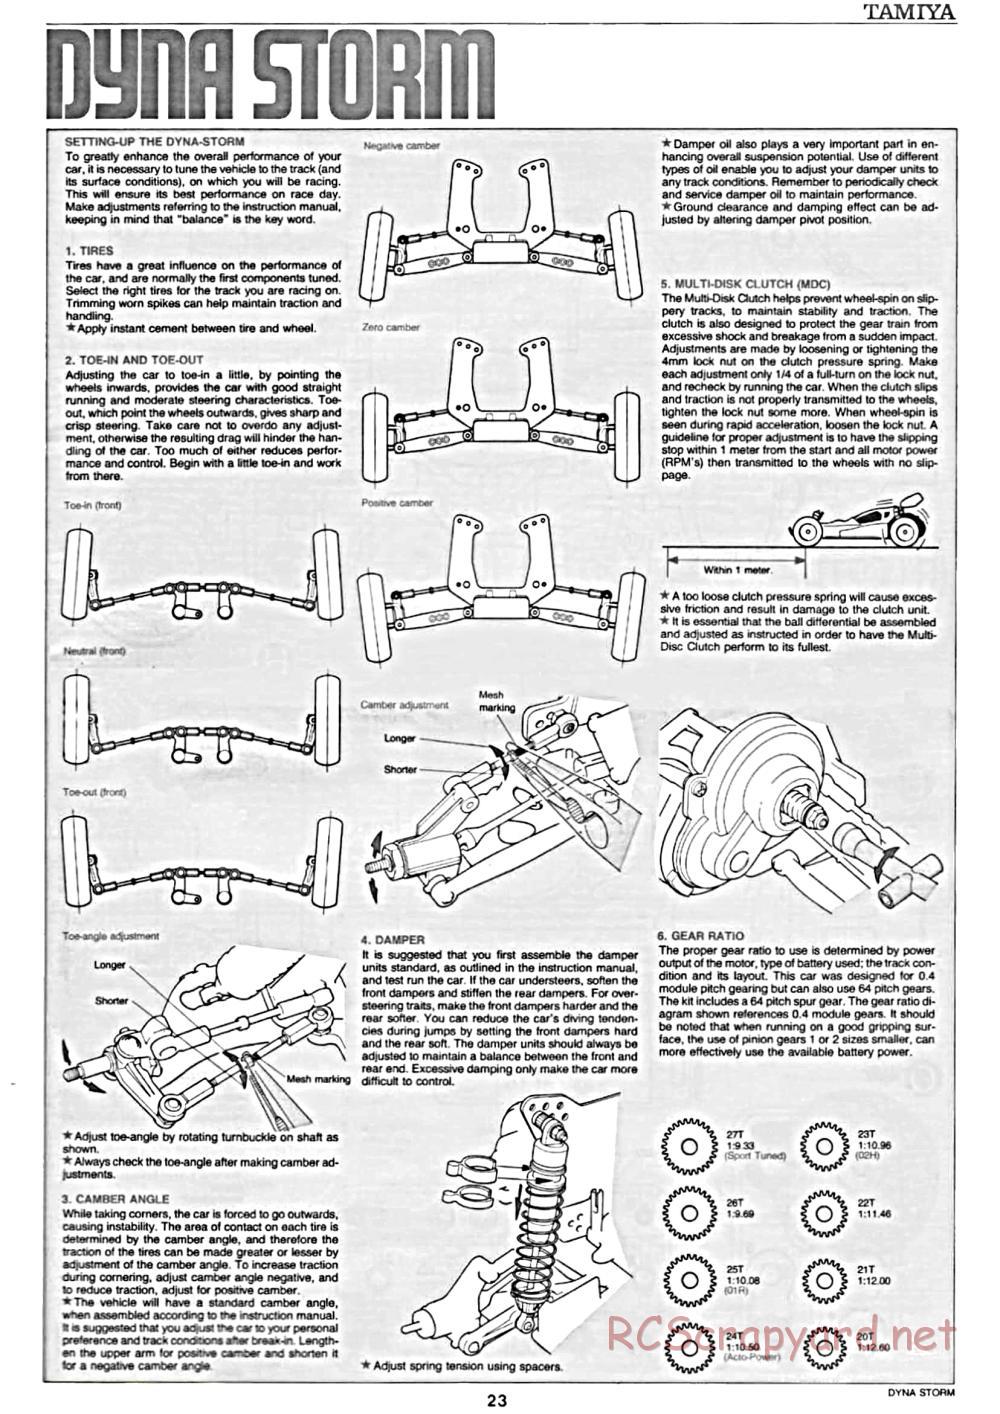 Tamiya - Dyna Storm Chassis - Manual - Page 23